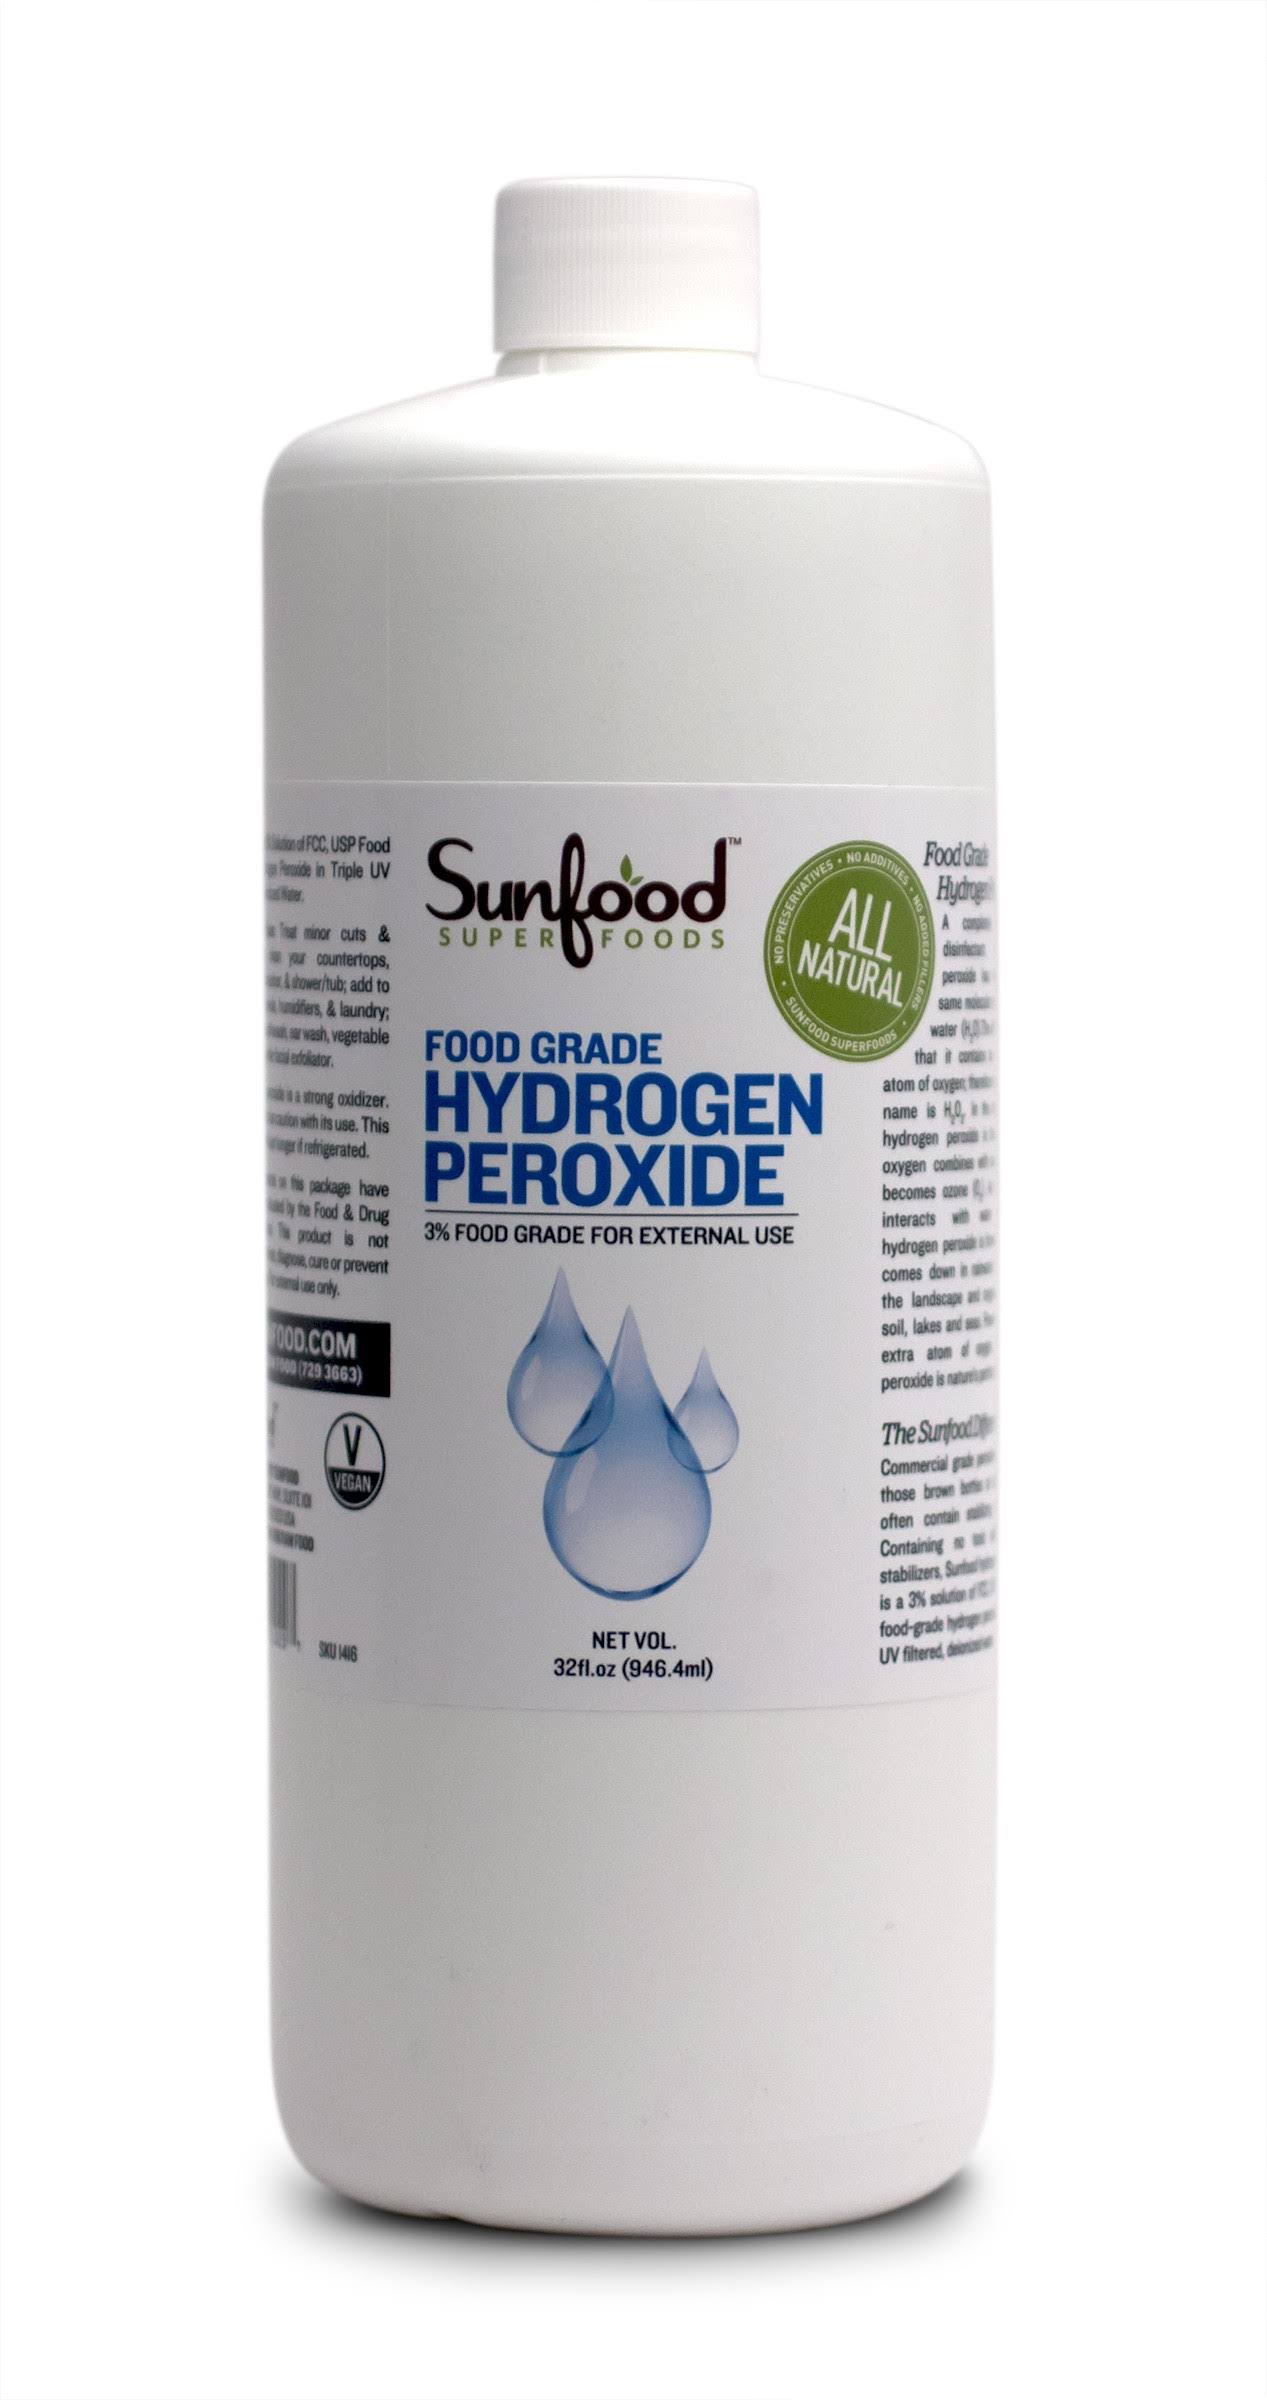 Sunfood Hydrogen Peroxide - 3% Food Grade, 32oz